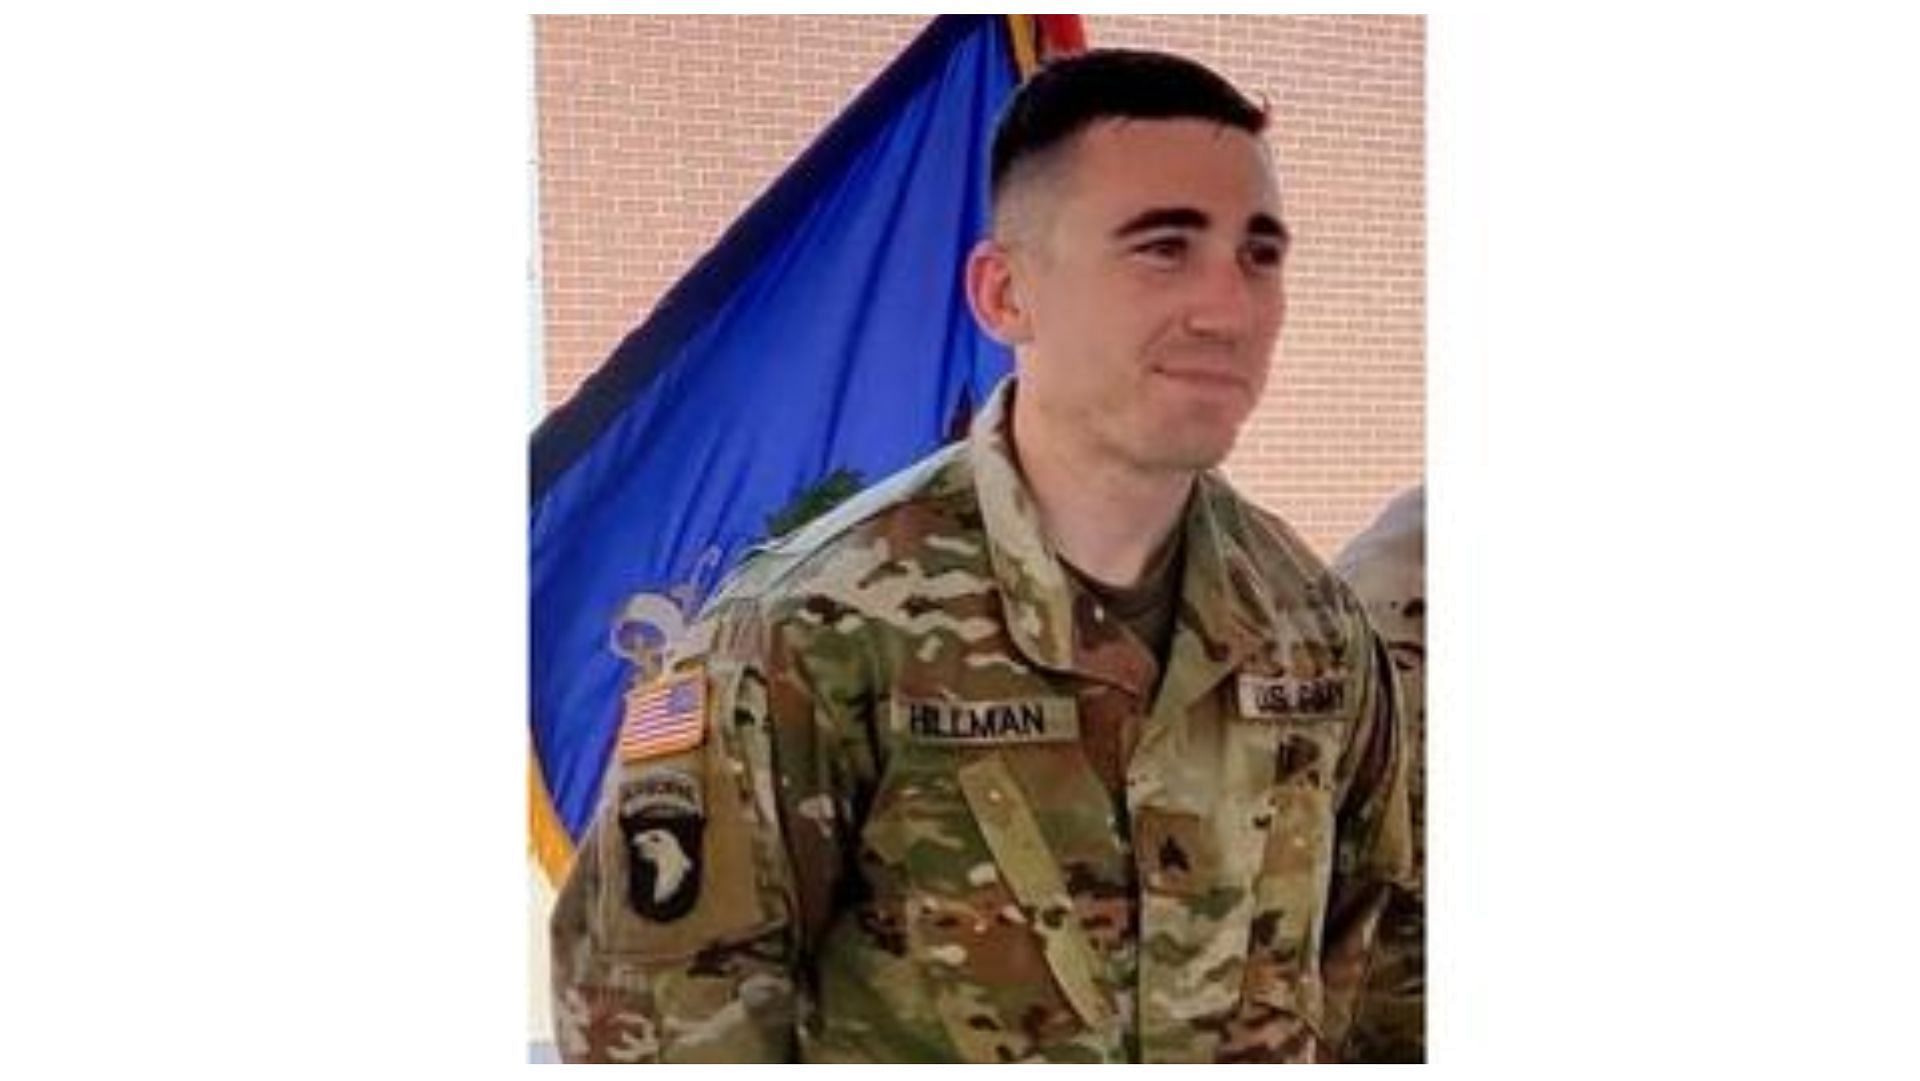 Army Veteran Nathan Hillman fatally shot at Georgia base, (Image via @18airbornecorps/Twitter)